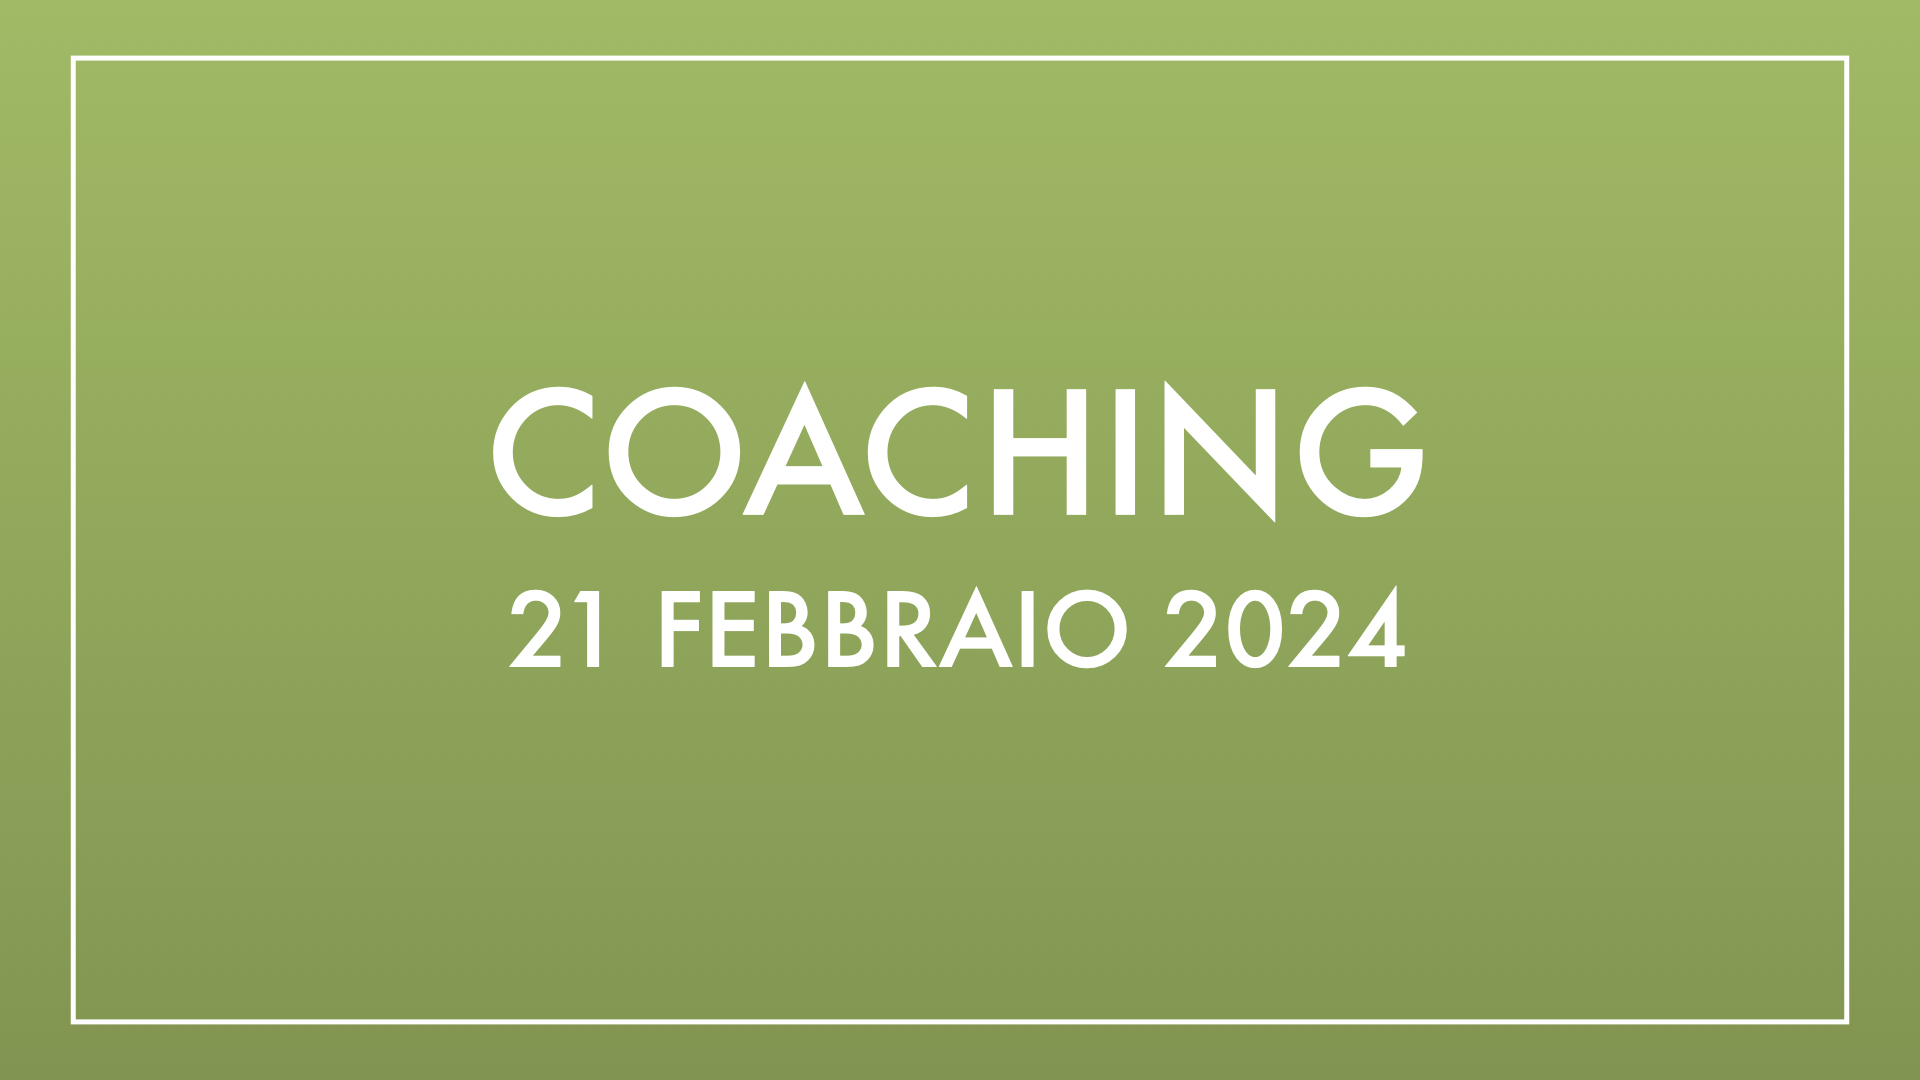 Coaching 21 febbraio 2024